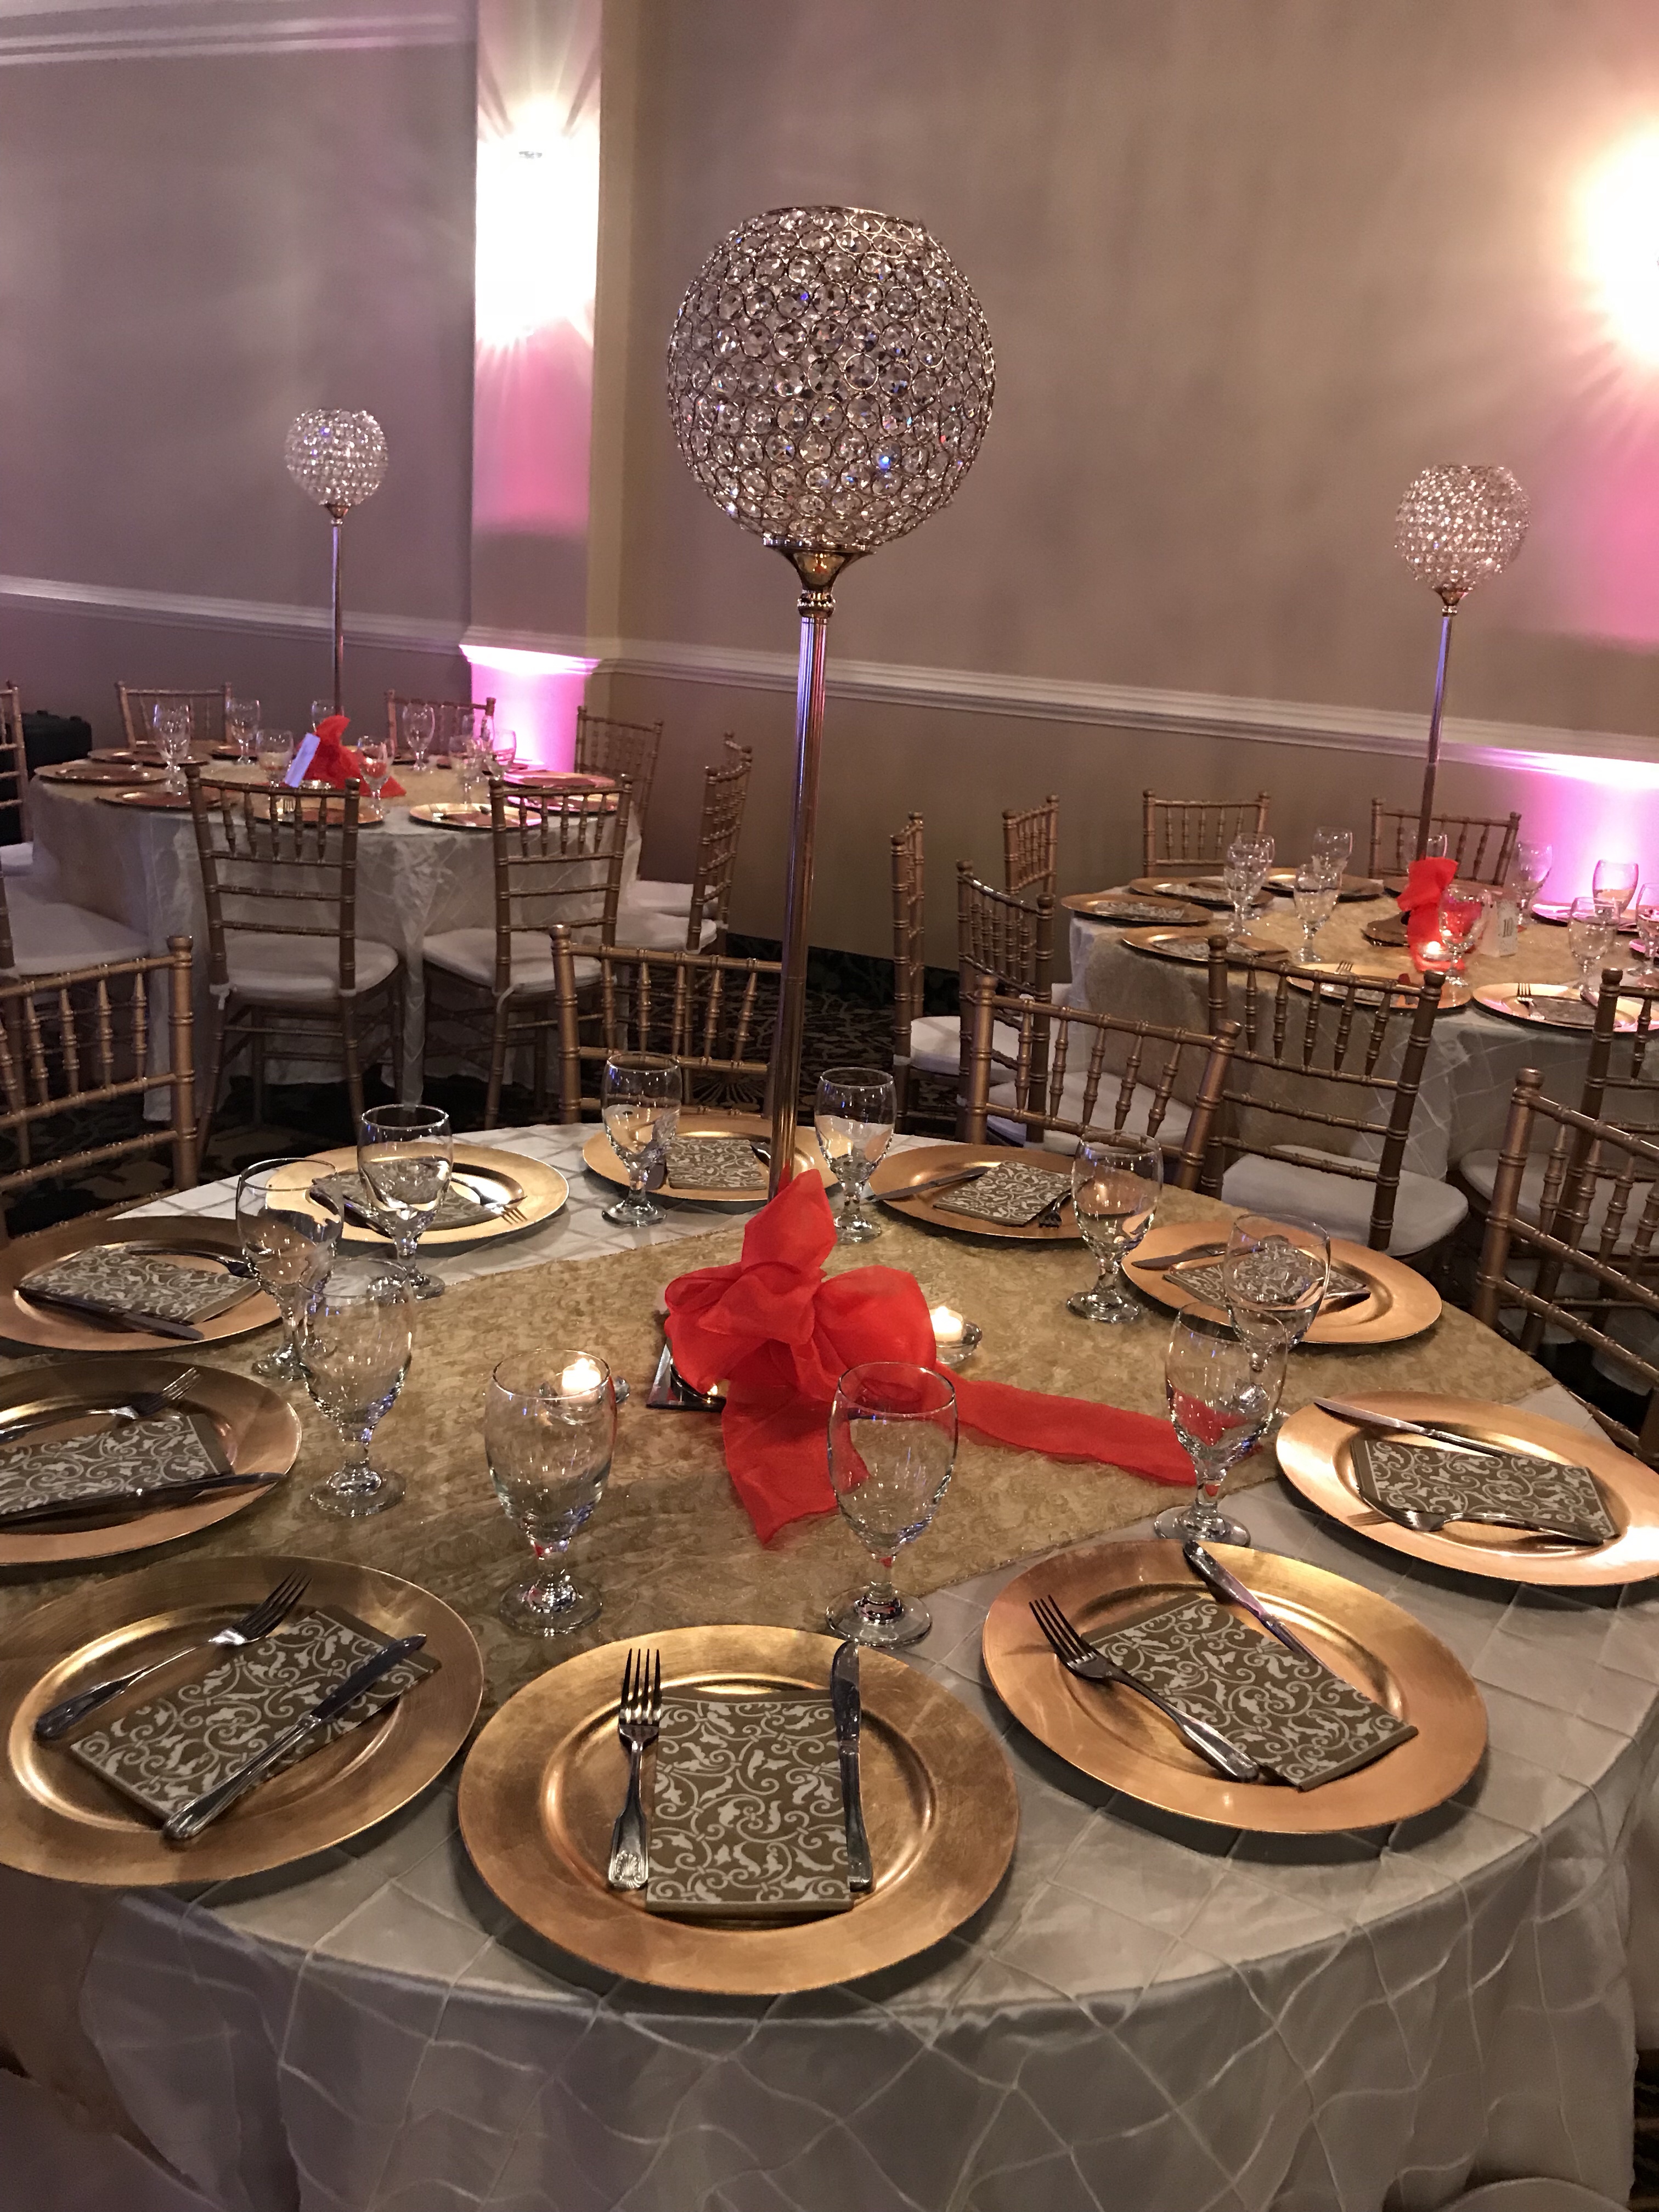 All Inclusive Wedding Venue Near Me-$3500 - Events Unlimited "De Banquet"